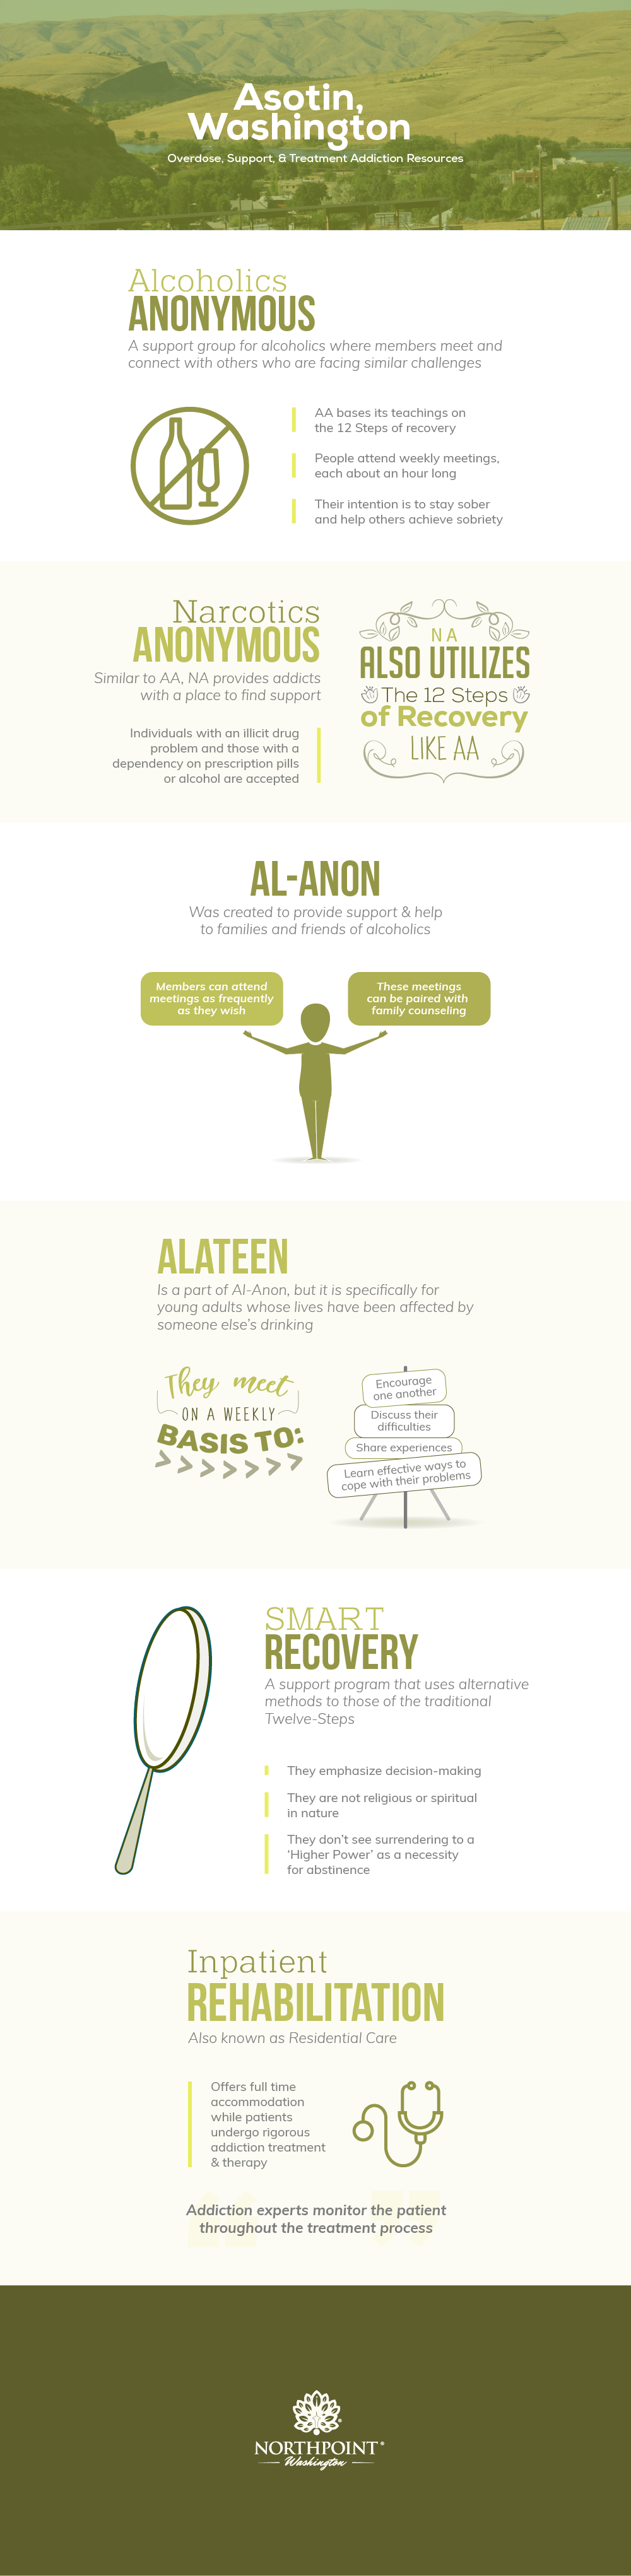 Asotin, WA Resources Full Infographic